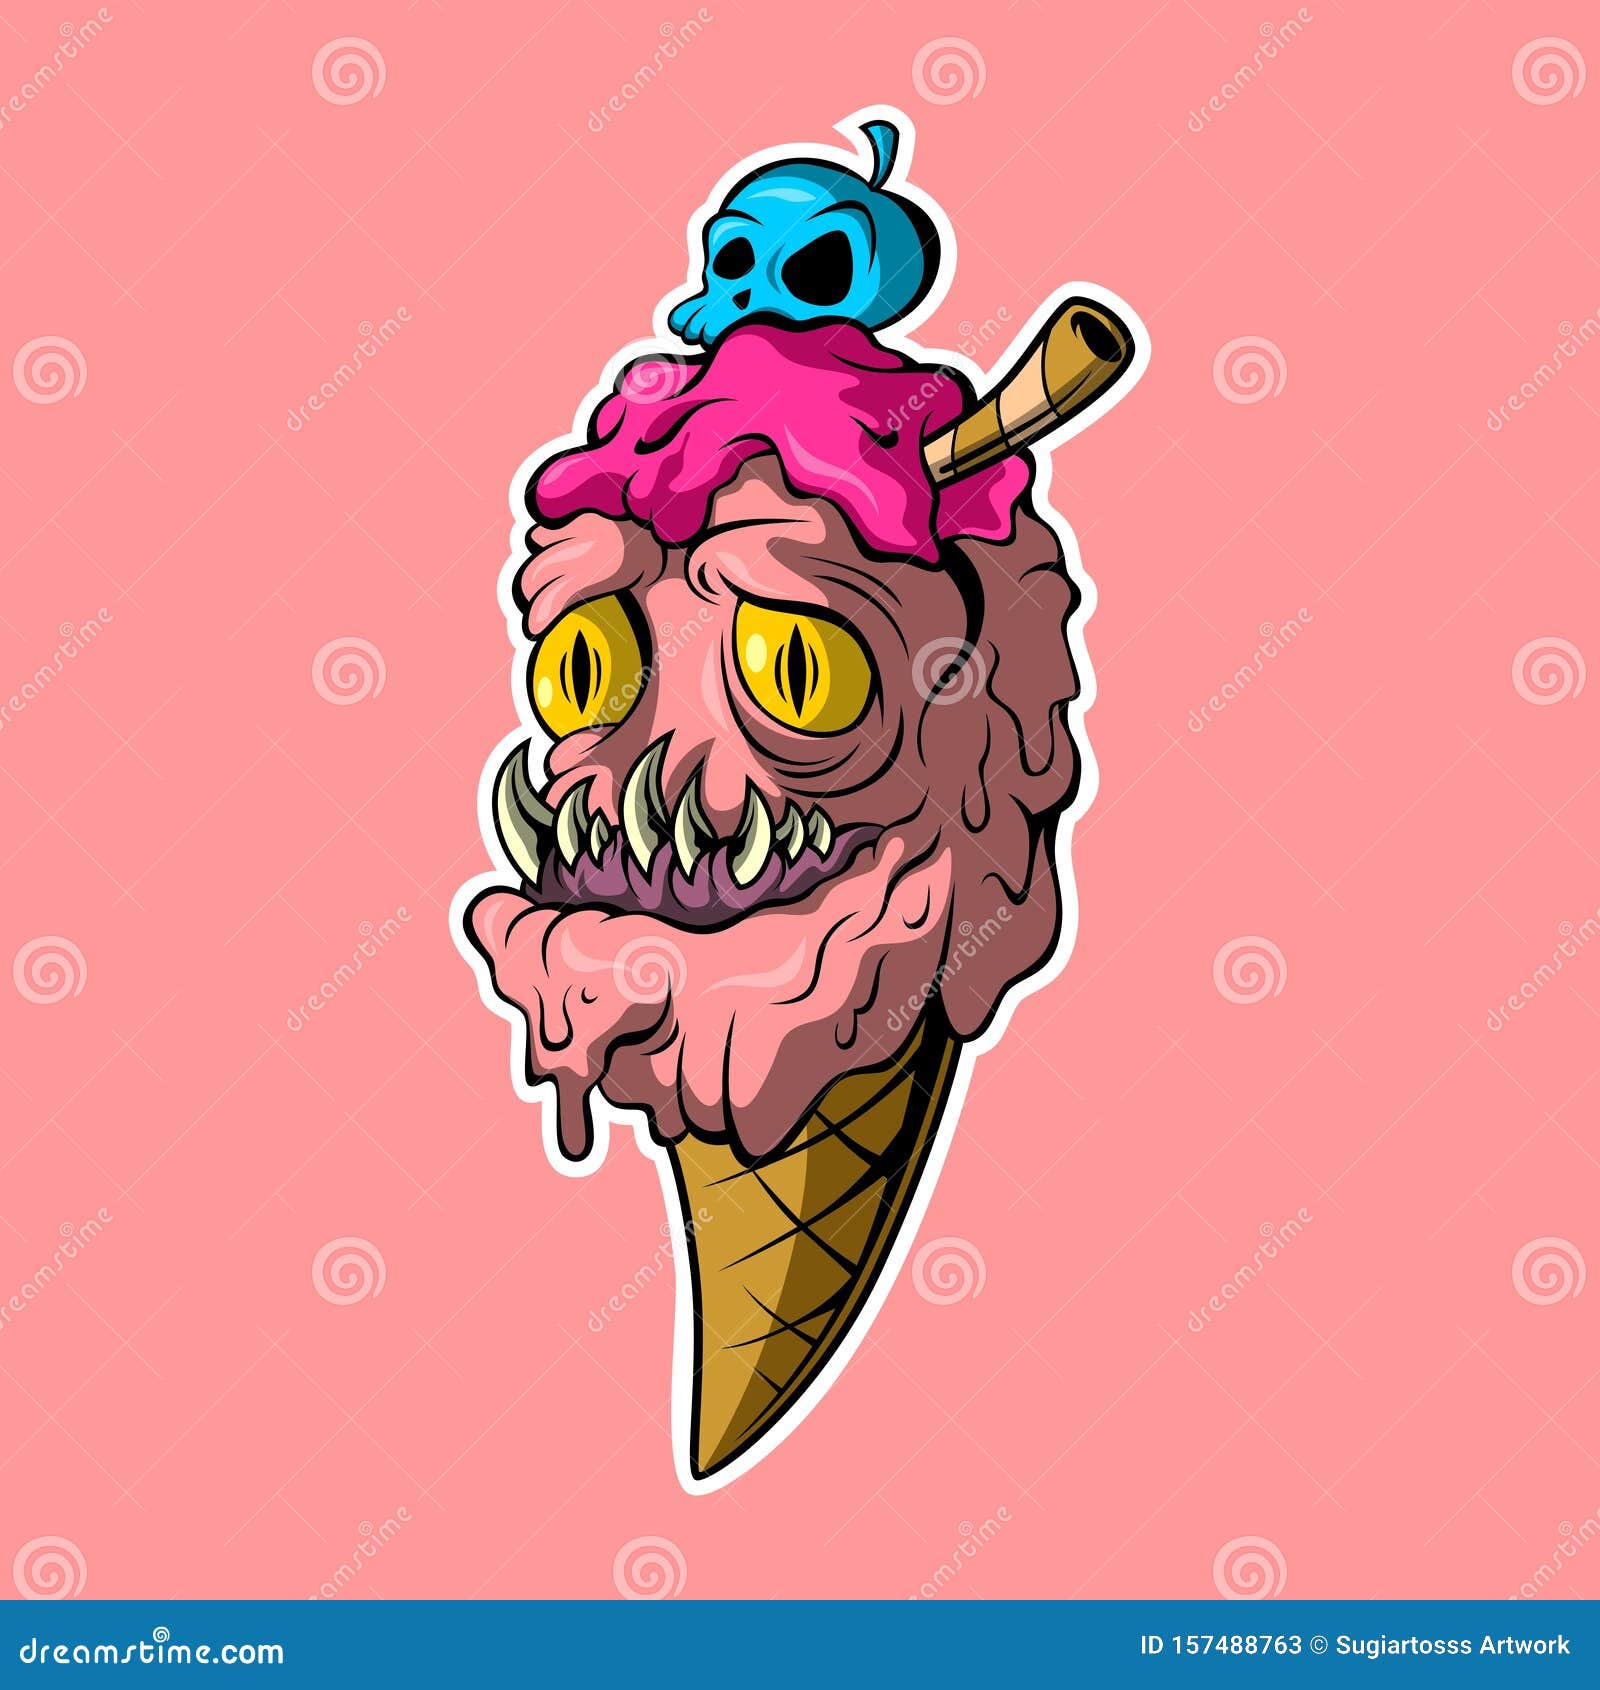 Deadly ice cream design stock vector. Illustration of freak - 157488763